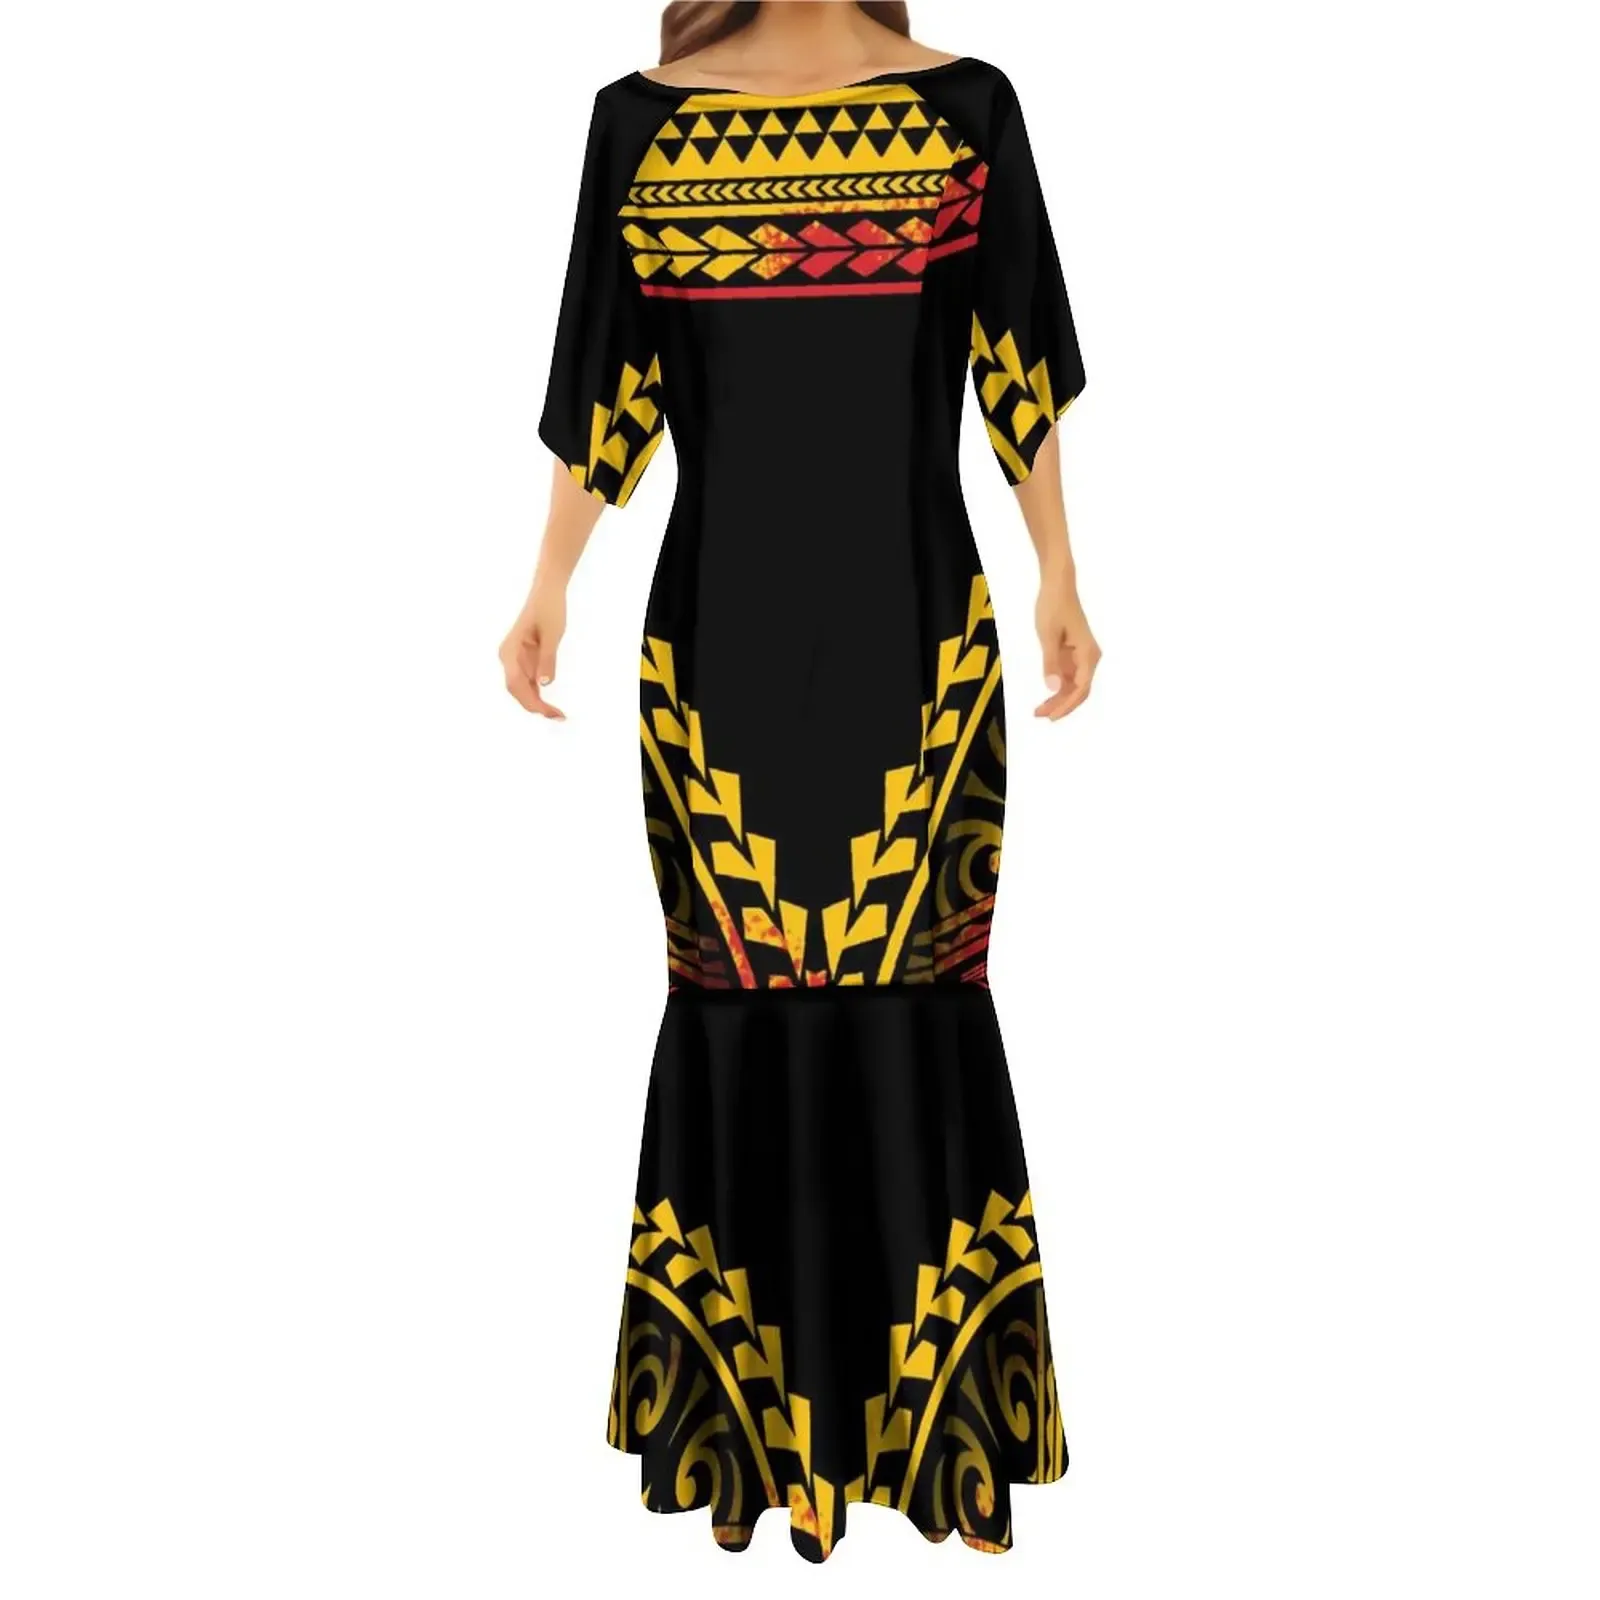 Oem atacado samoan puletasi boa qualidade upscale baixo preço ilha vestido polinésio streetwear estiramento sereia vestidos